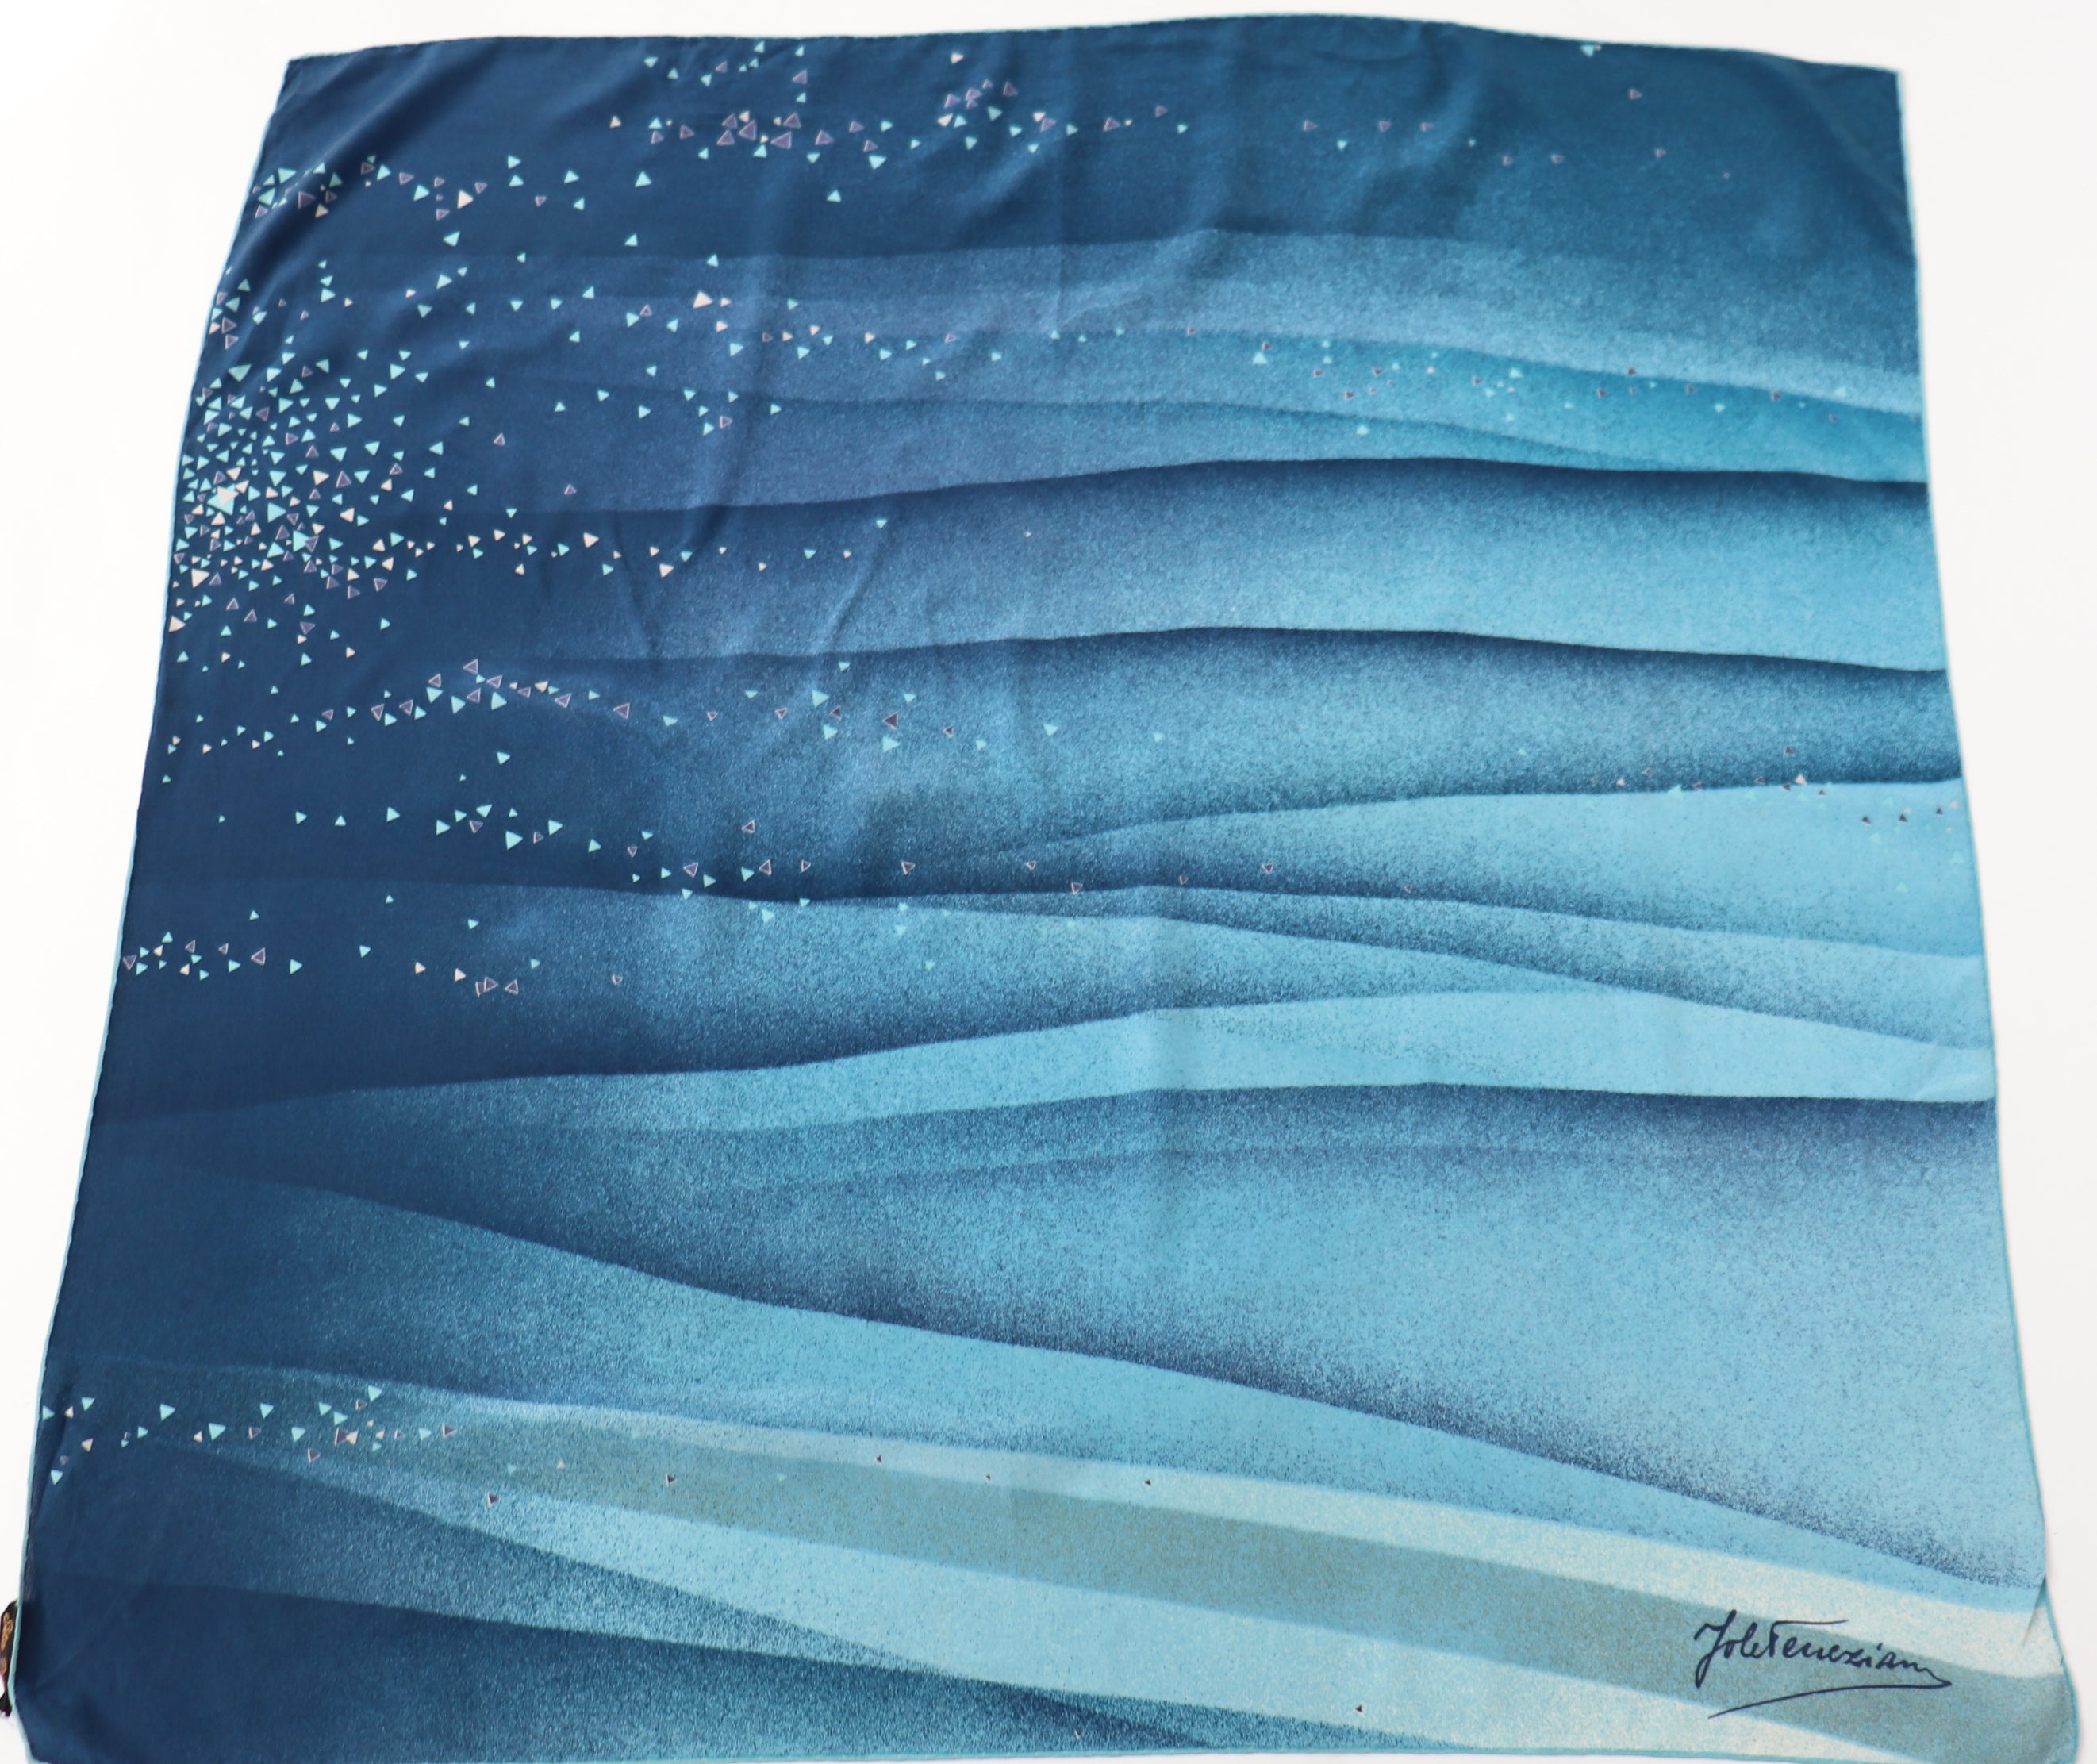 Jole Veneziana Vintage Silk Scarf - Blue Abstract Print - Large